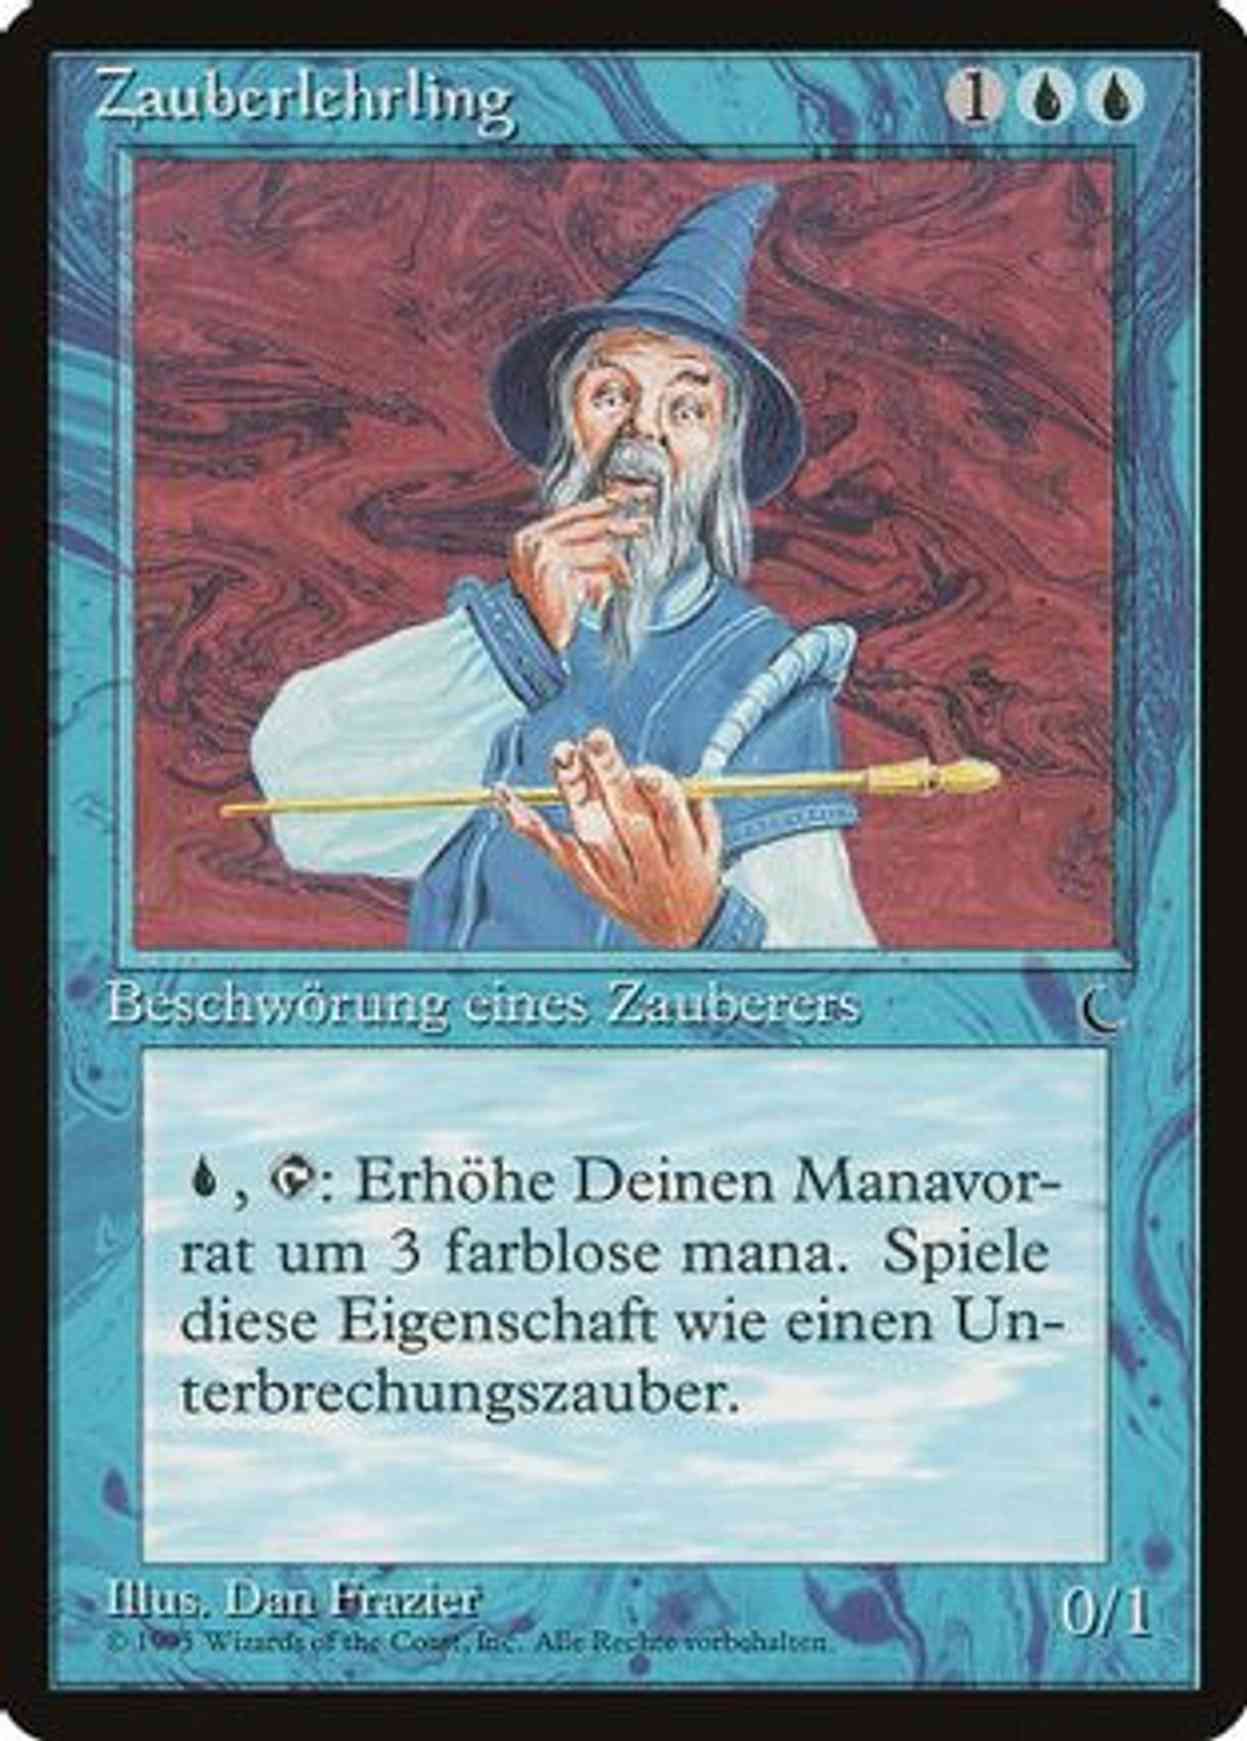 Apprentice Wizard (German) - "Zauberlehrling" magic card front